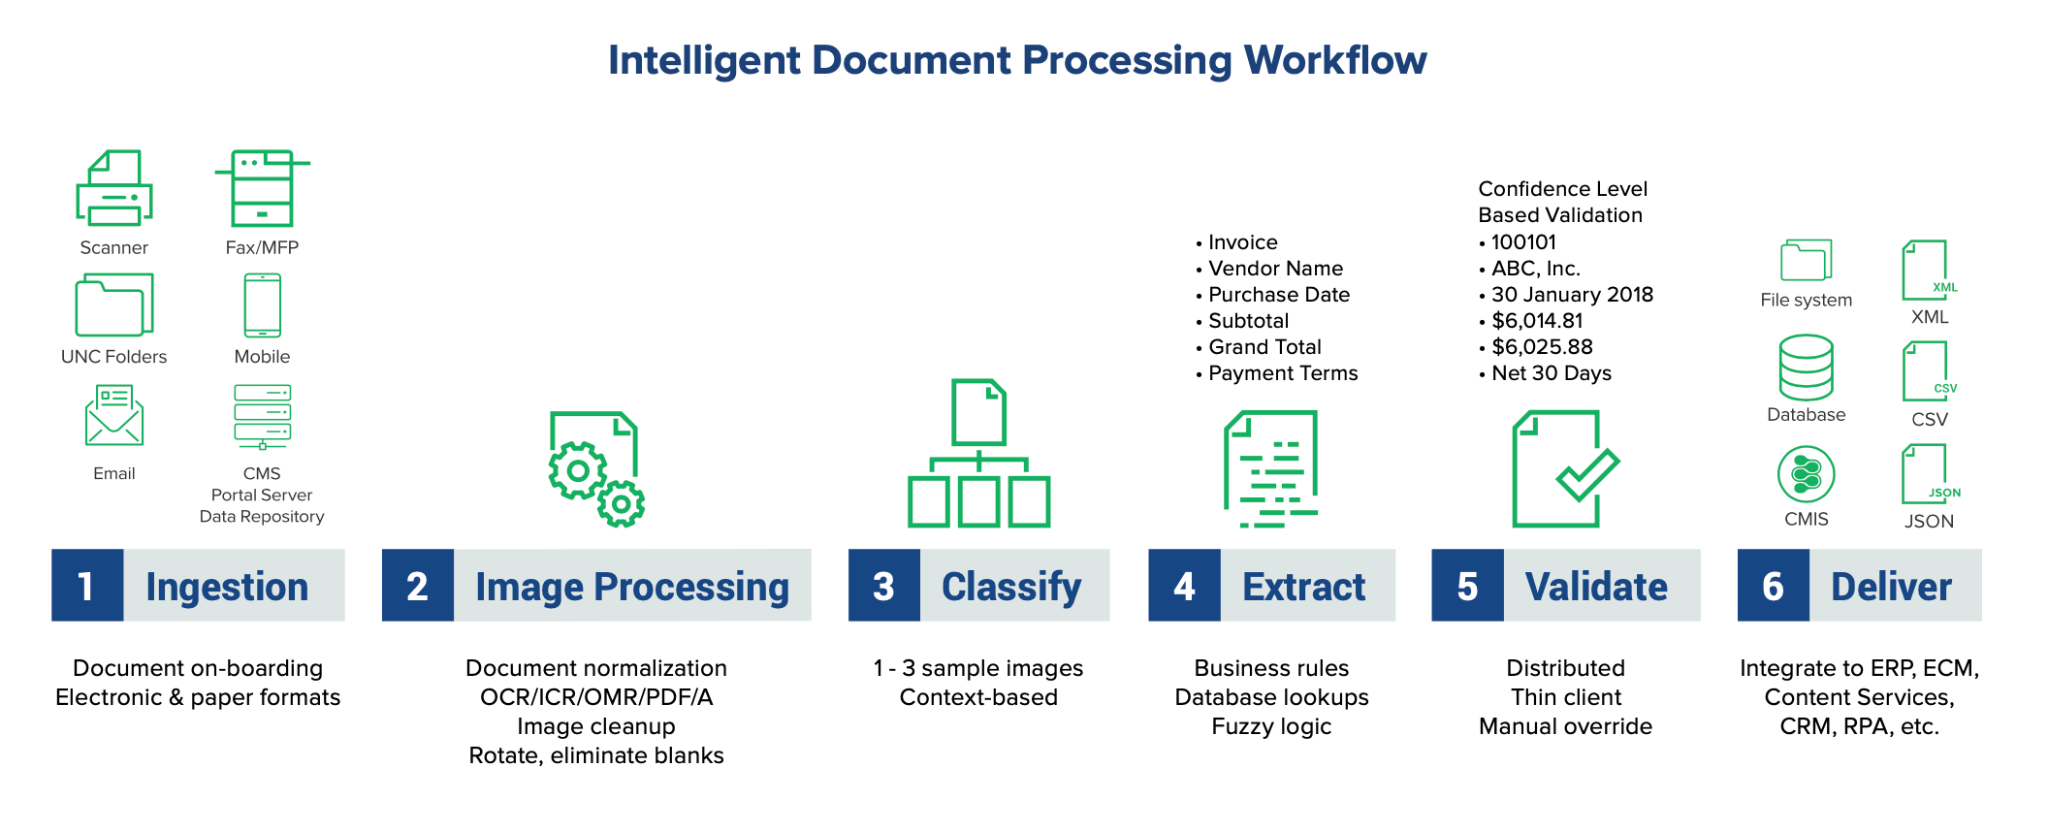 Intelligent Document Processing Workflow